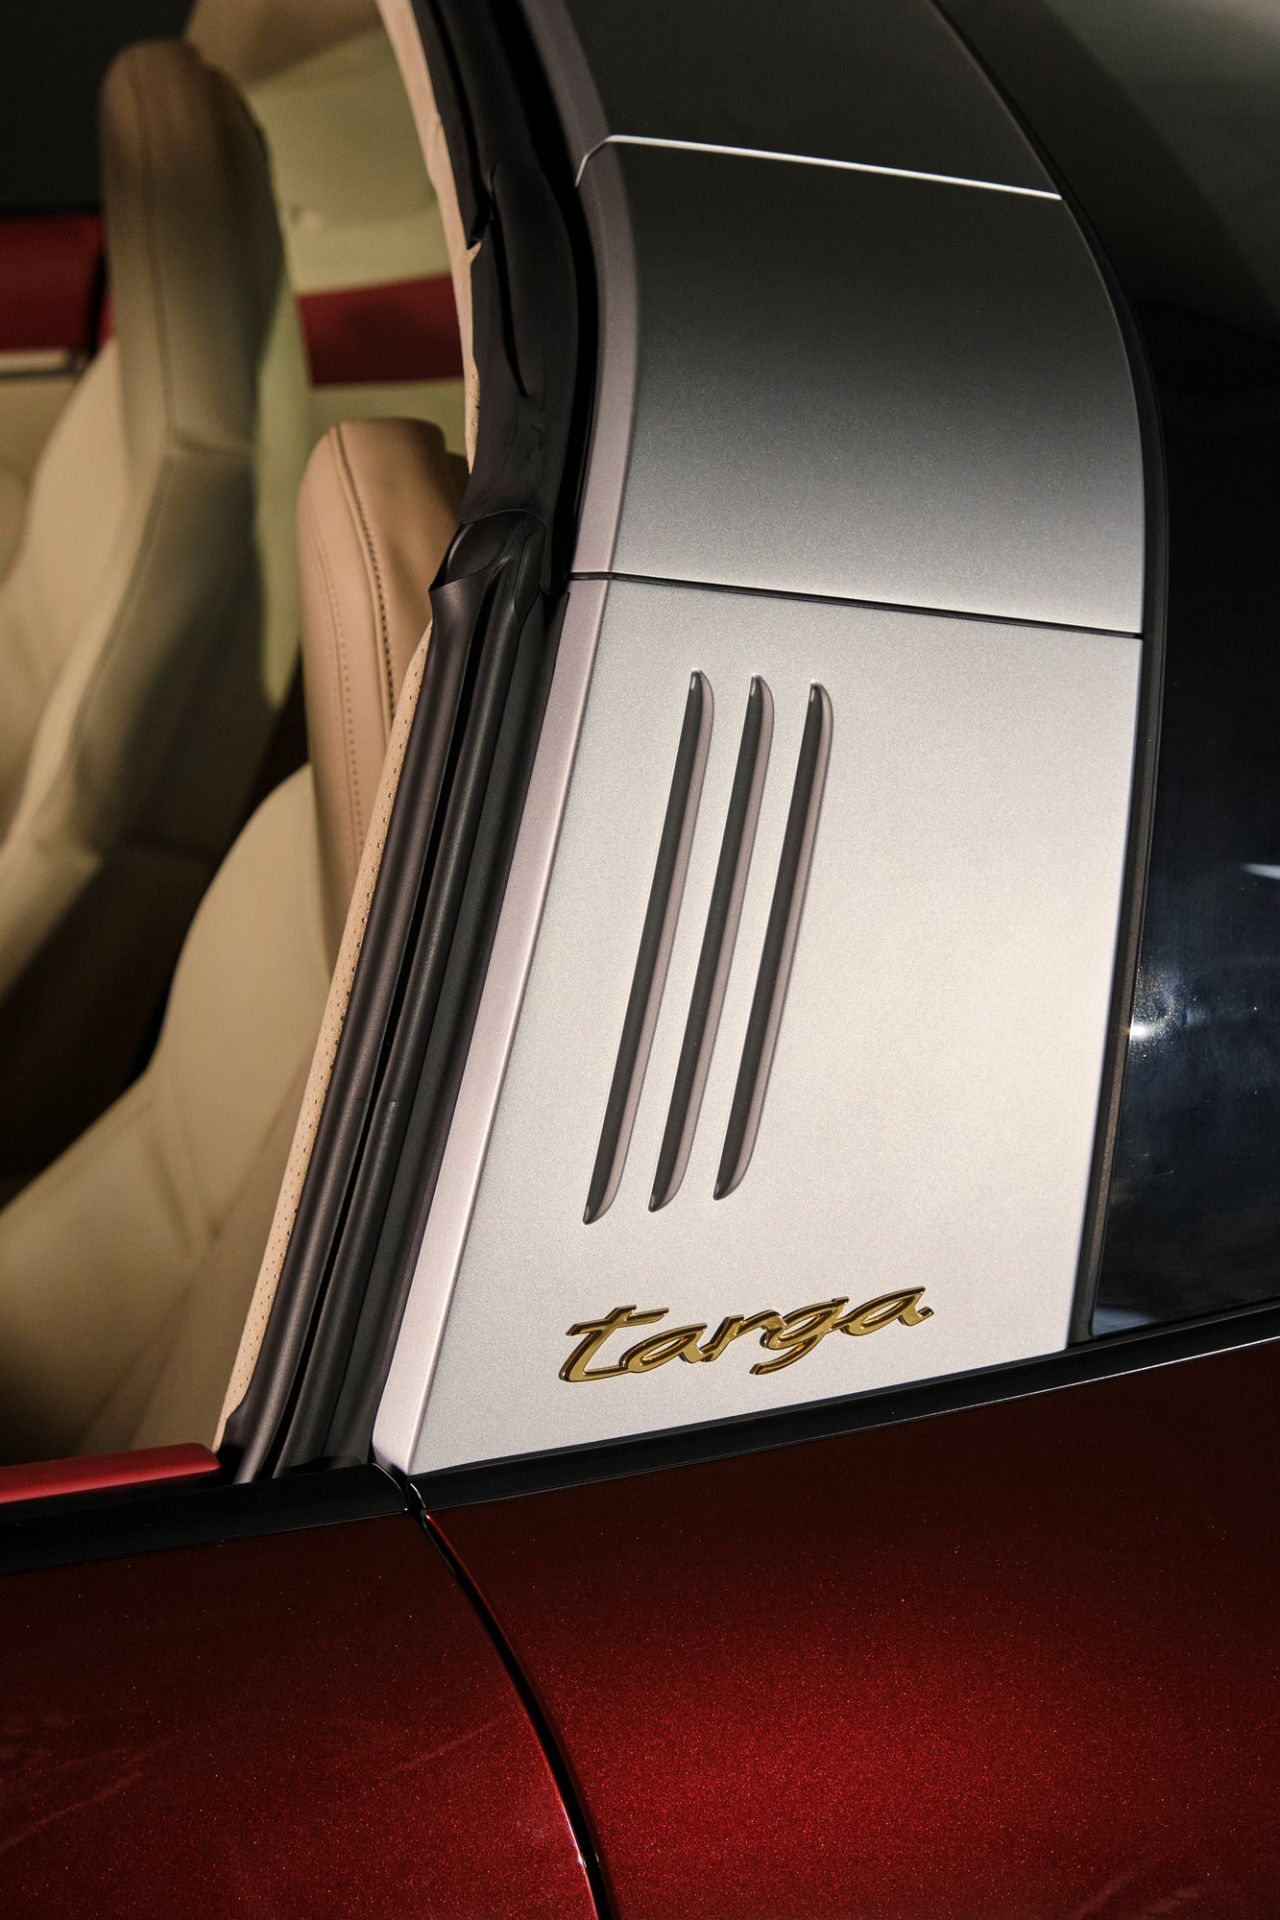 2021 Porsche 911 Targa 4S Heritage Design Edition (Porsche) - Image 6 of 23